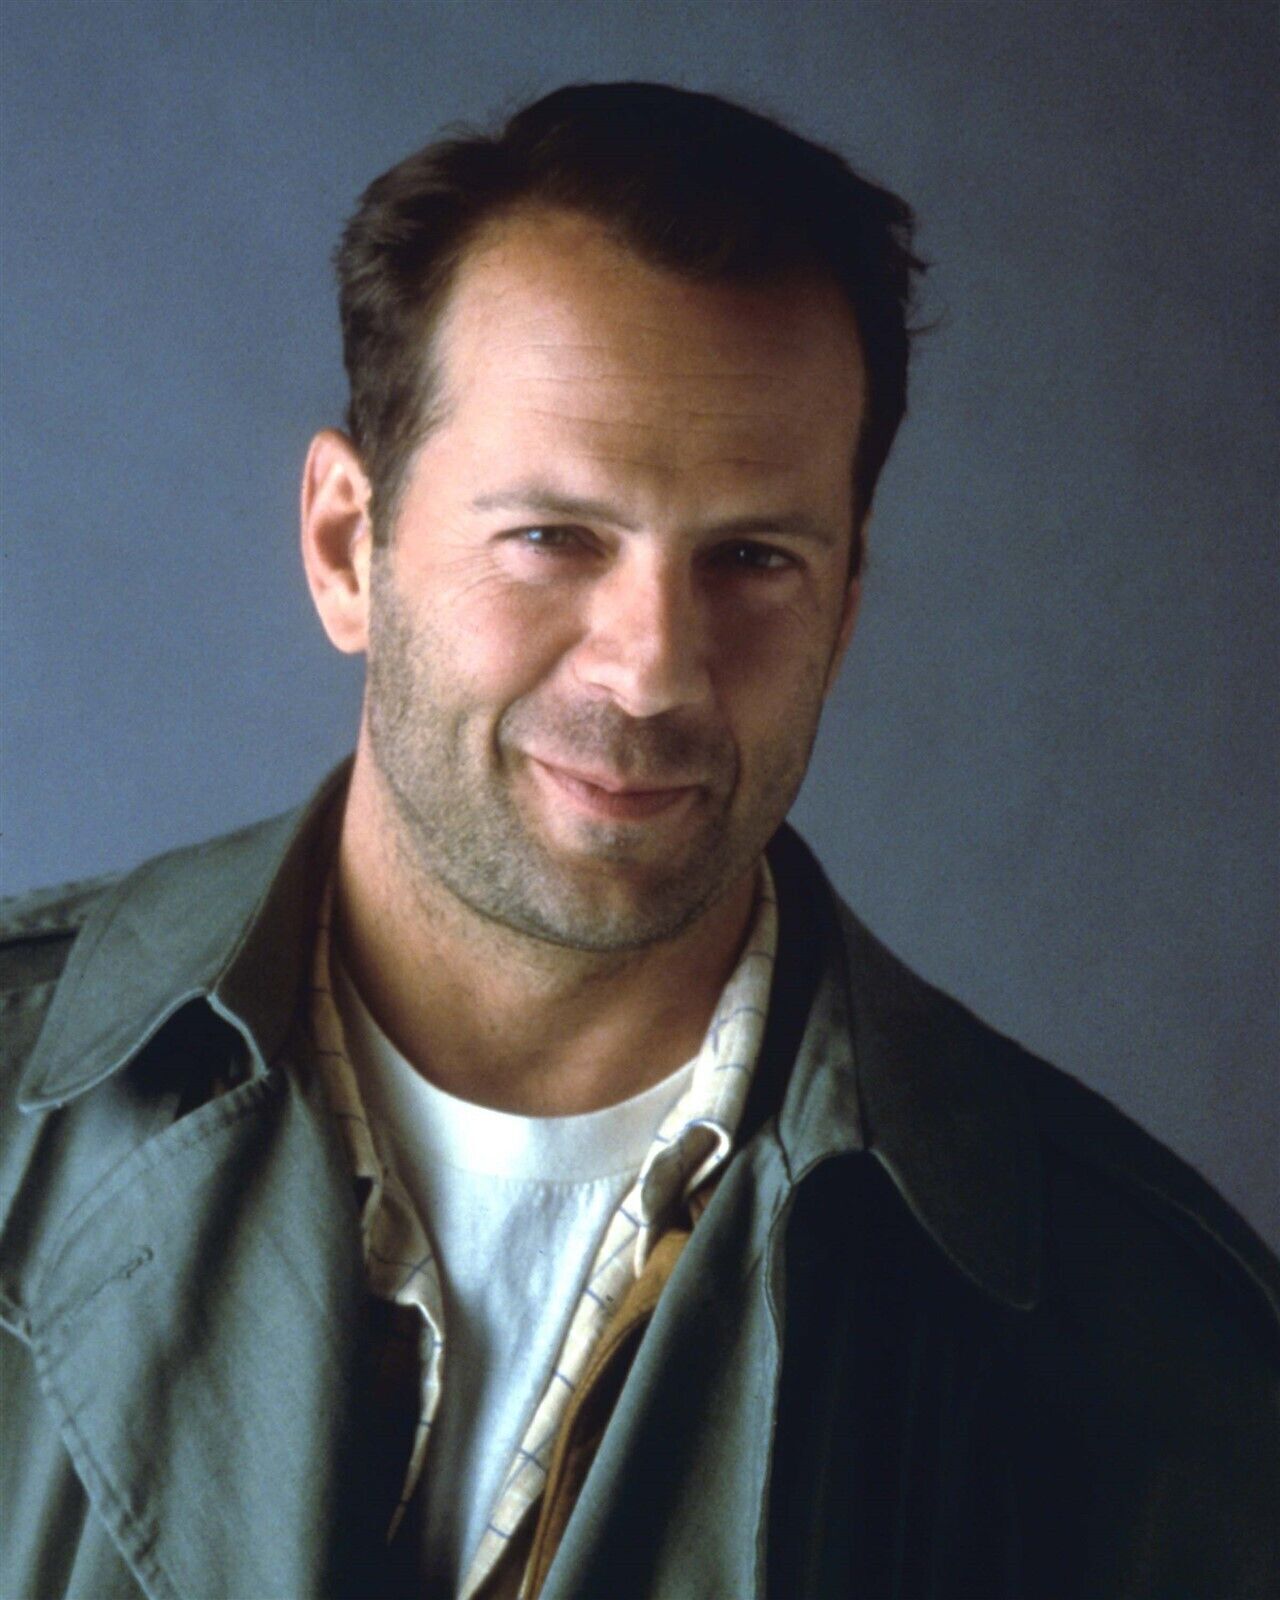 Bruce Willis smiling studio portrait 1991 The Last Boy Scout 24x30 inch poster